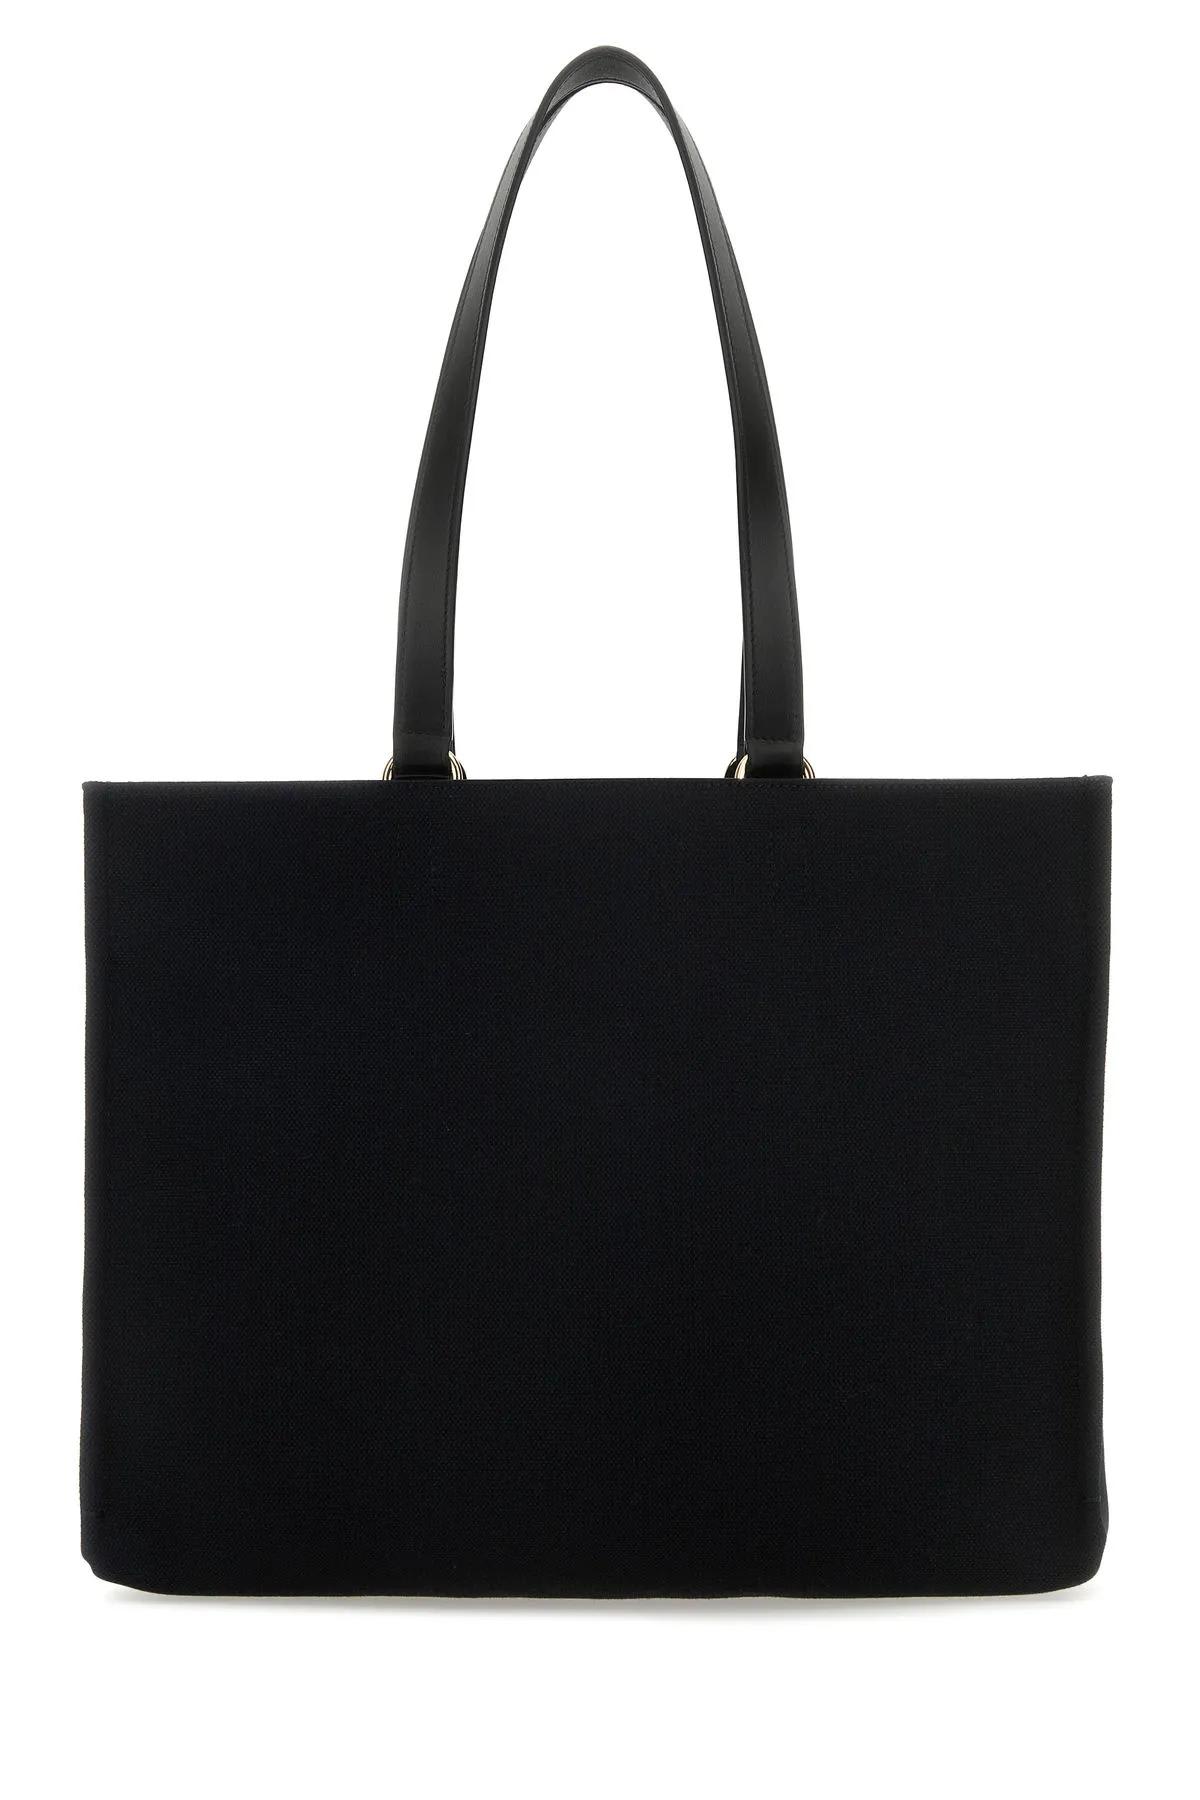 Shop Ferragamo Black Canvas Shopping Bag